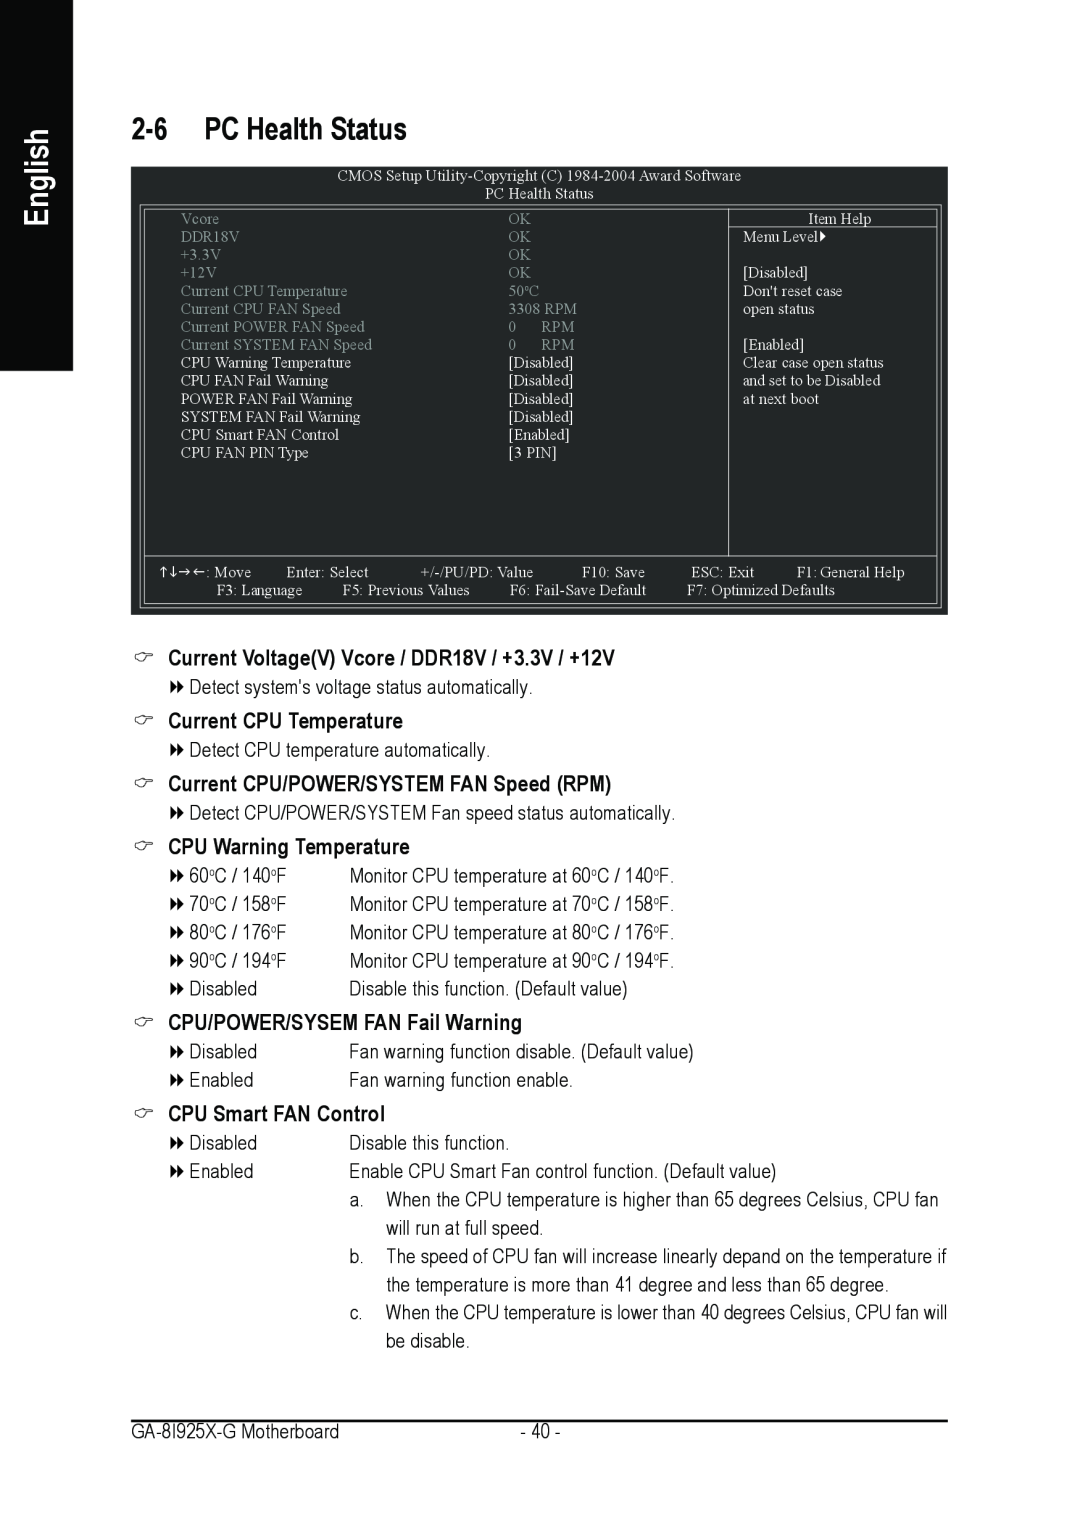 Gigabyte GA-8I925X-G PC Health Status, Current VoltageV Vcore / DDR18V / +3.3V / +12V, Current CPU Temperature, English 